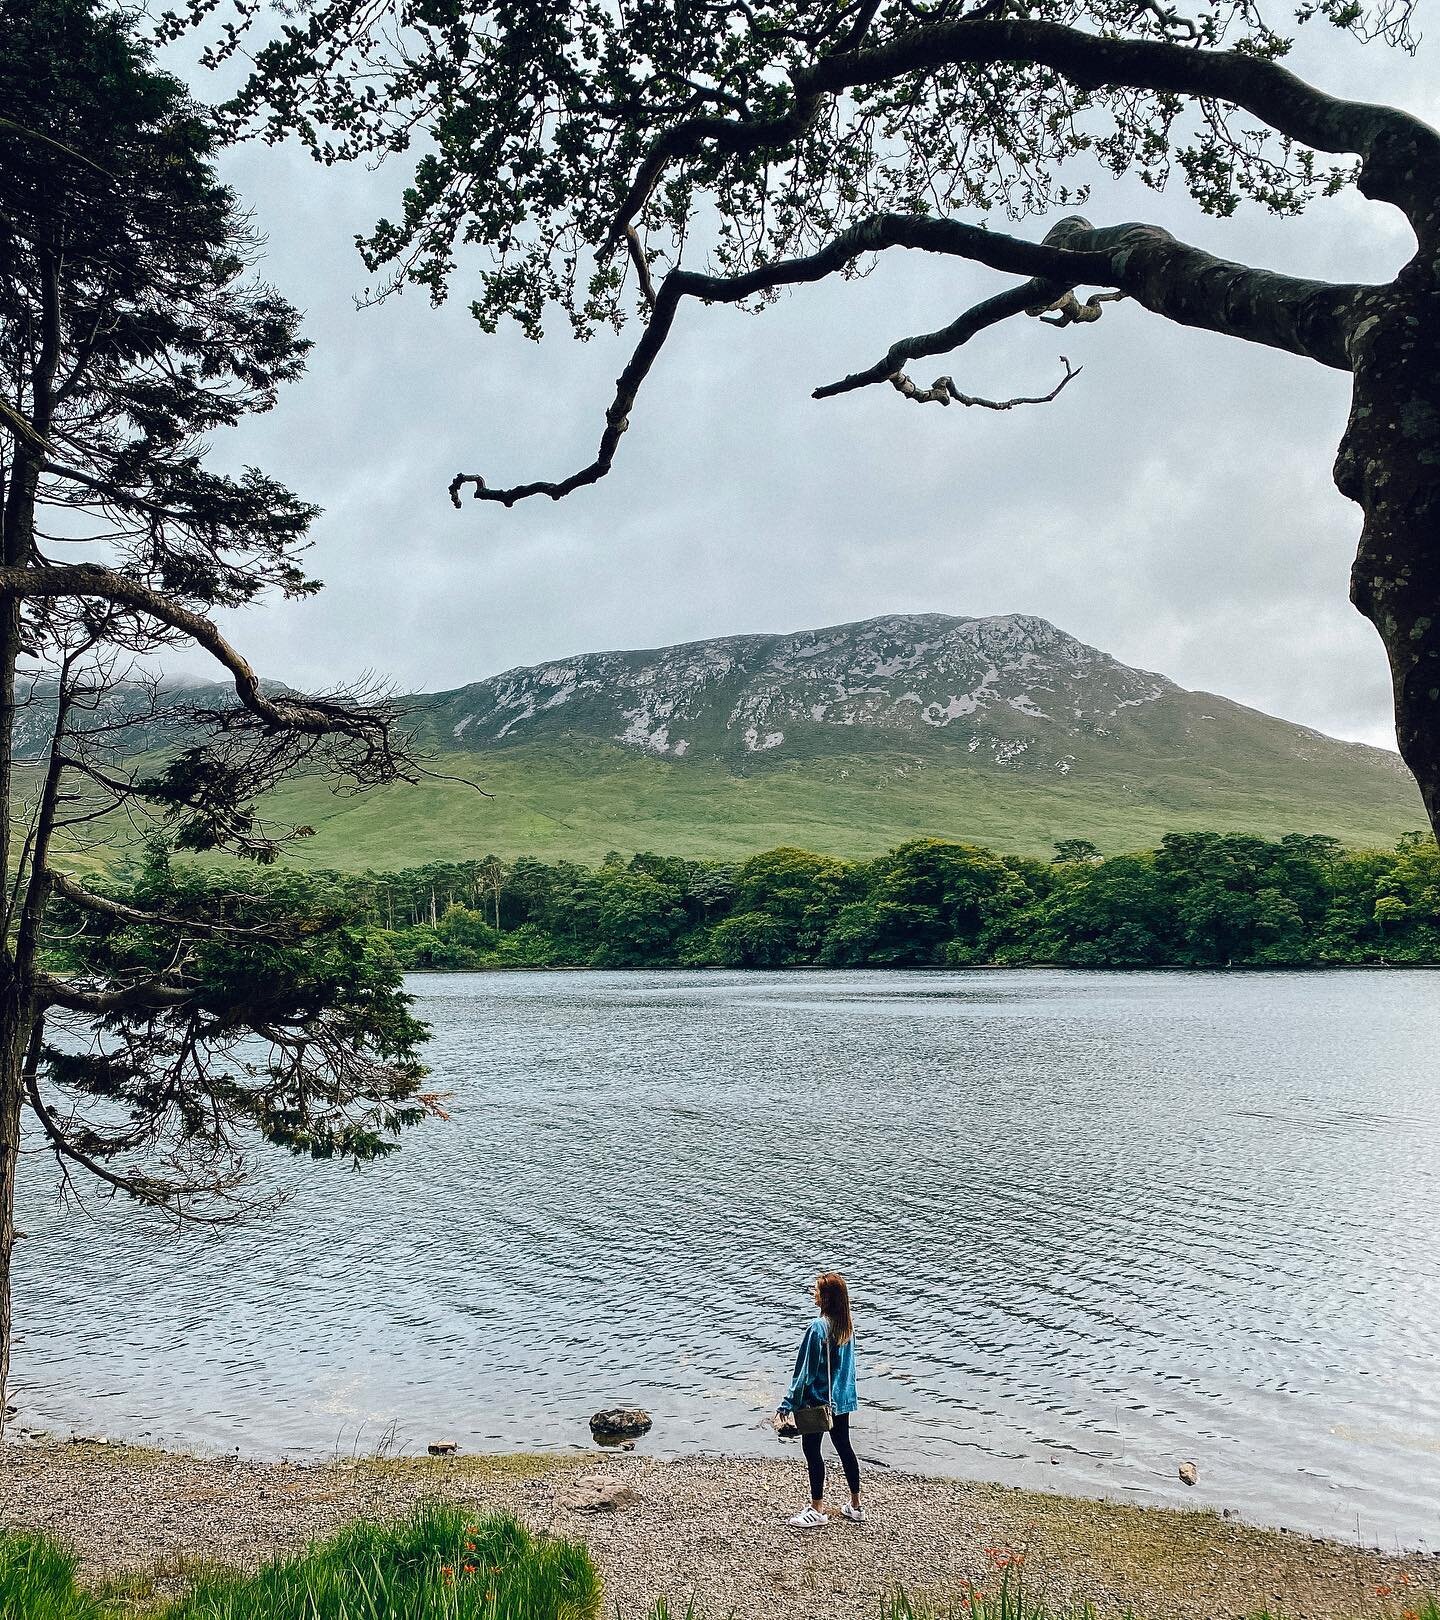 Missin&rsquo; being across the pond 💚
.
.
.
#ireland #wildatlanticway #travelphotography #travelblogger #travelgram #solotravel #kylemoreabbey #igers #instagood #connemara #irishcoast